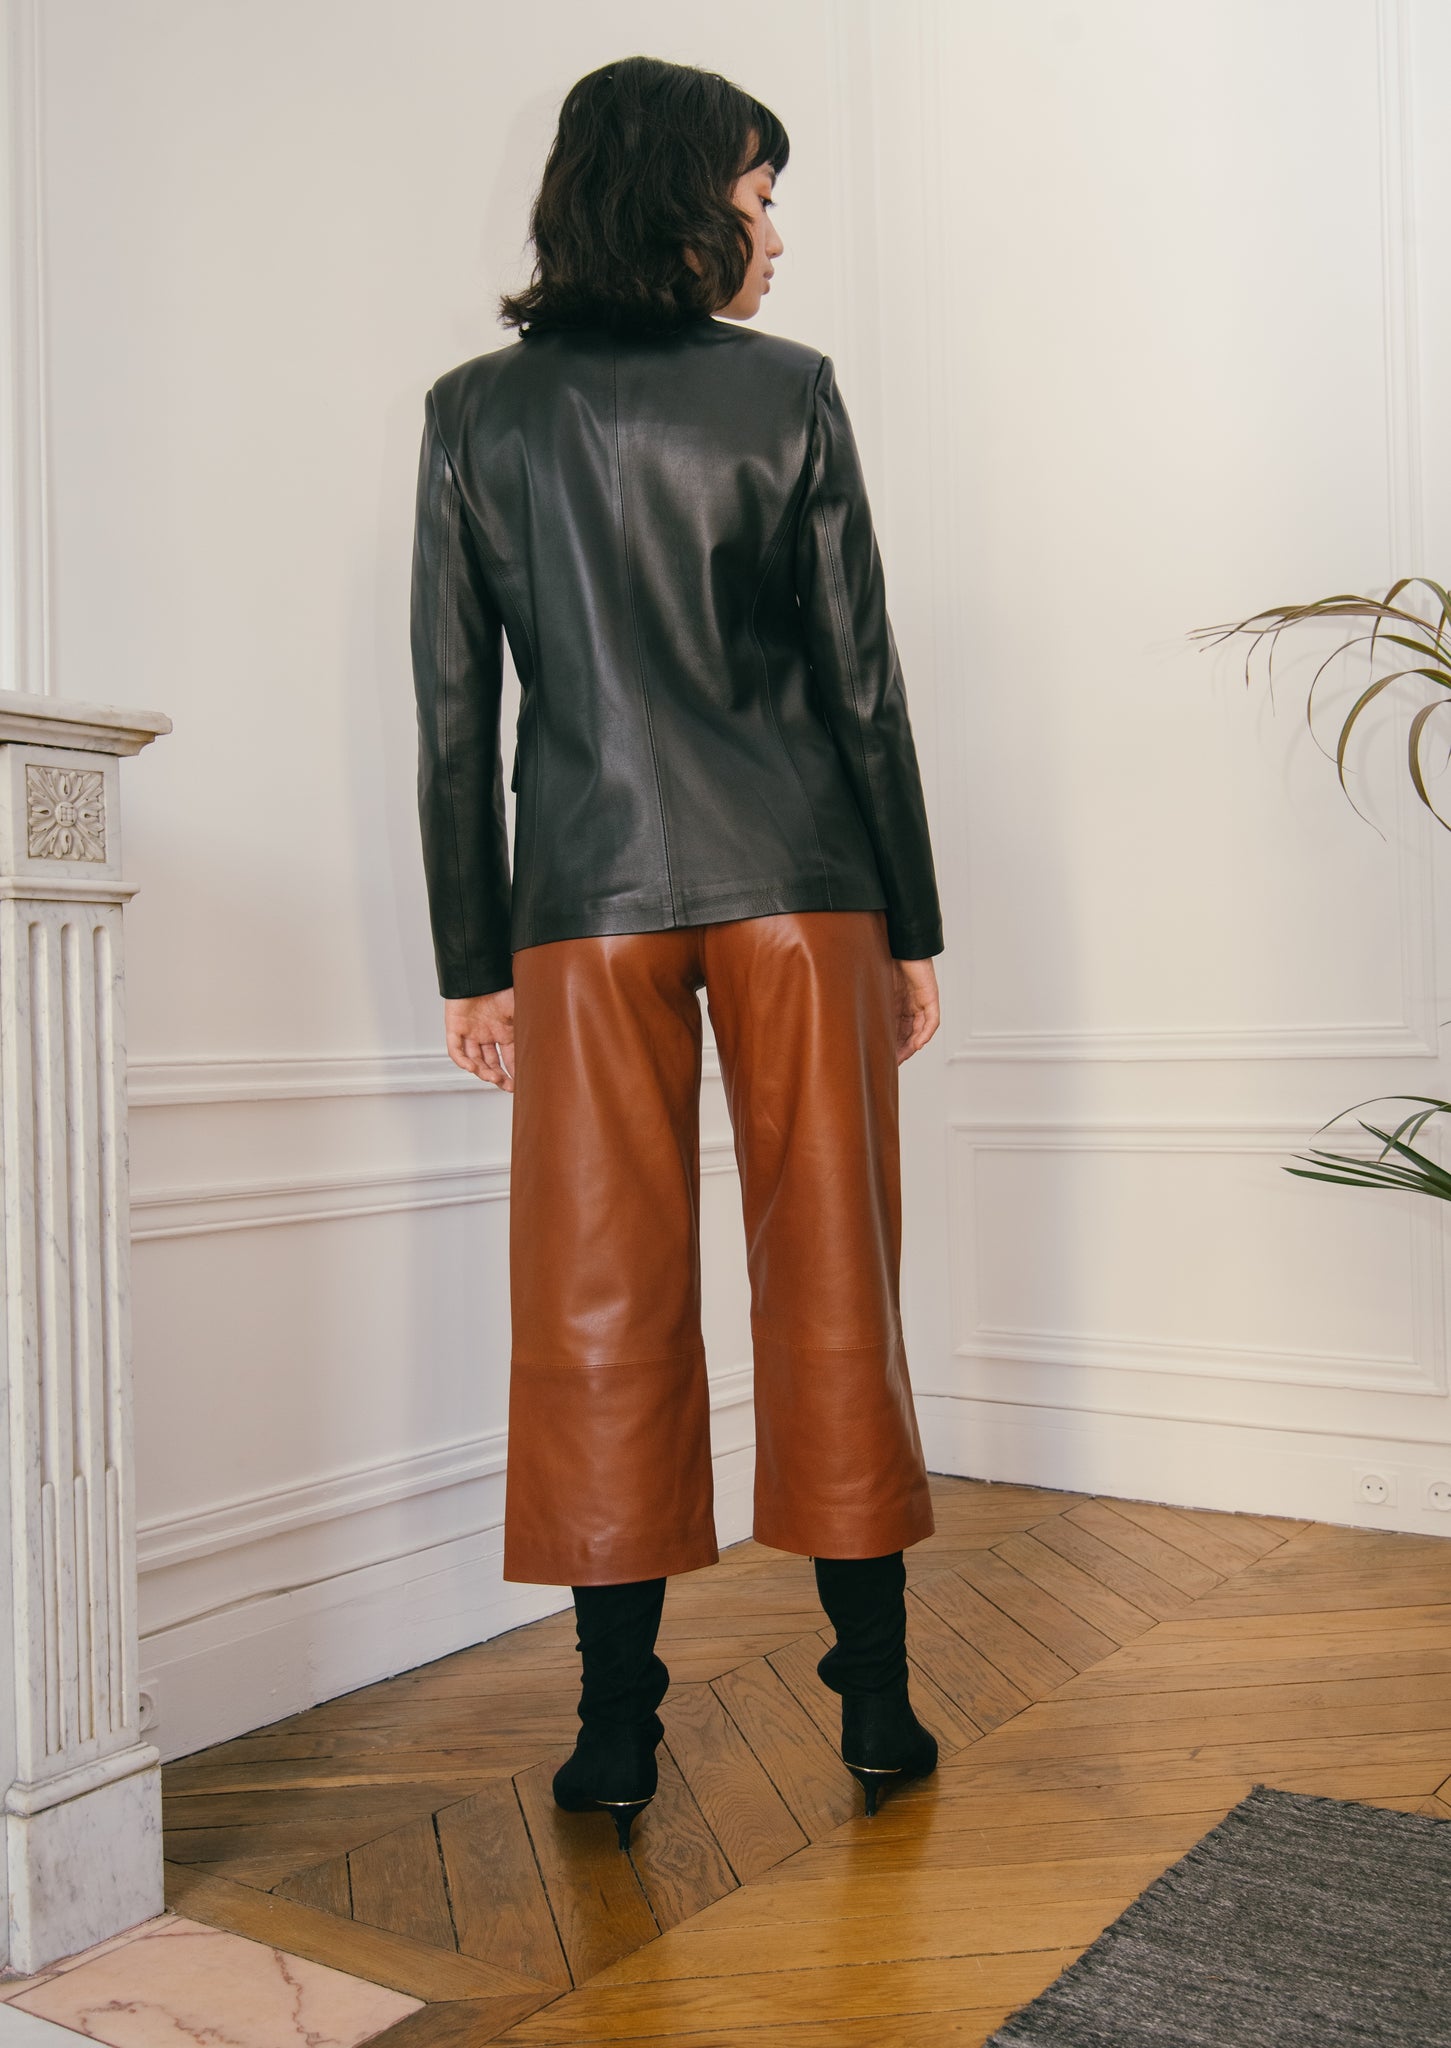 Yuri leather blazer